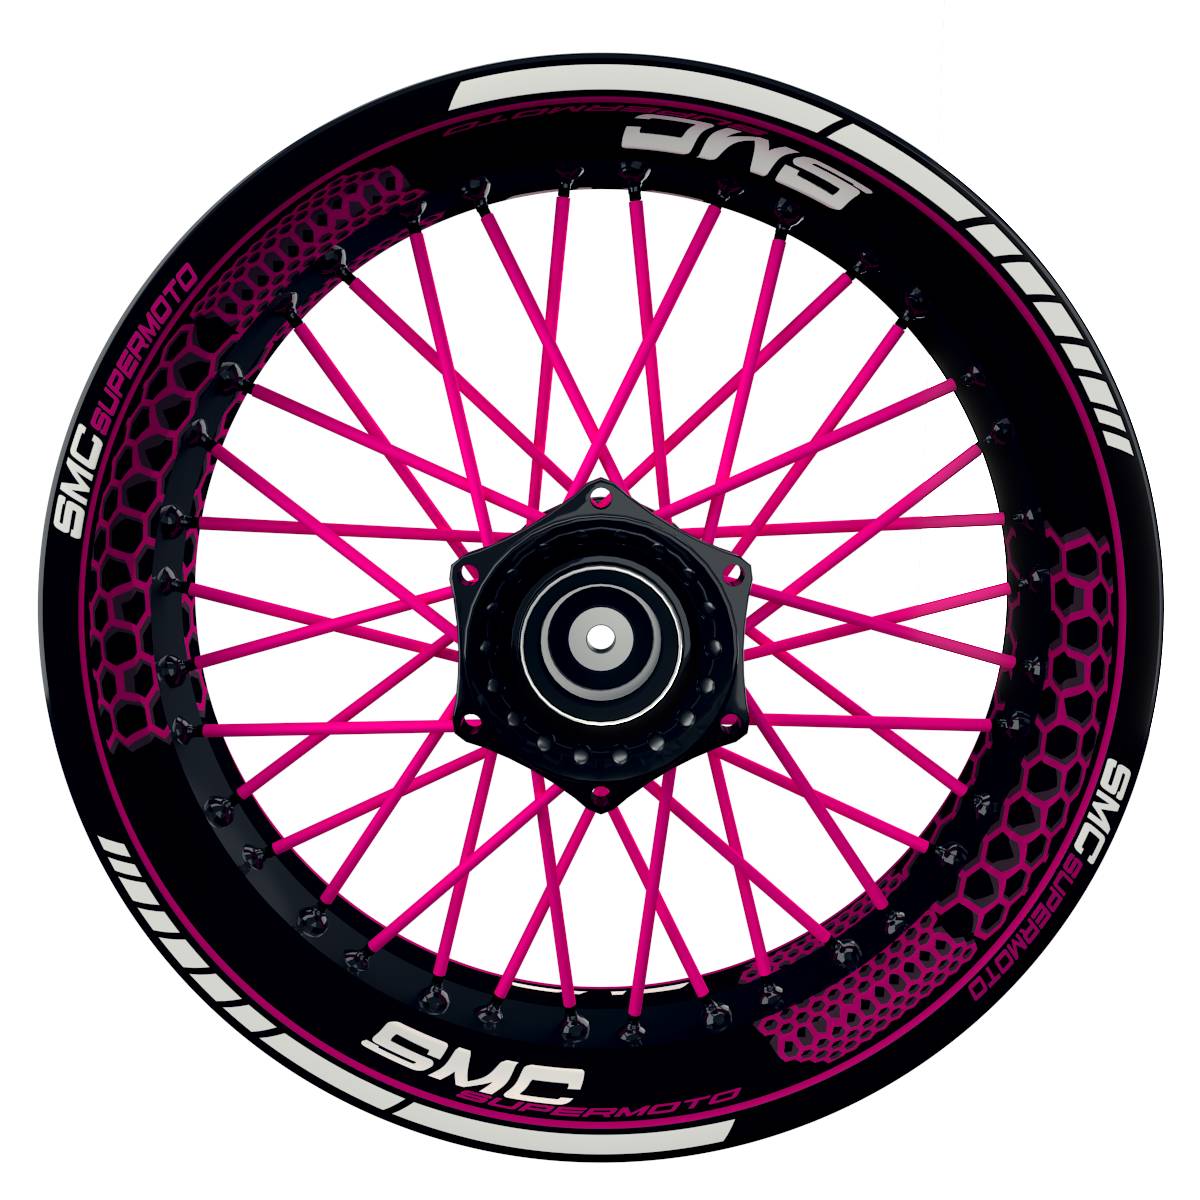 SMC Supermoto Hexagon schwarz pink Wheelsticker Felgenaufkleber